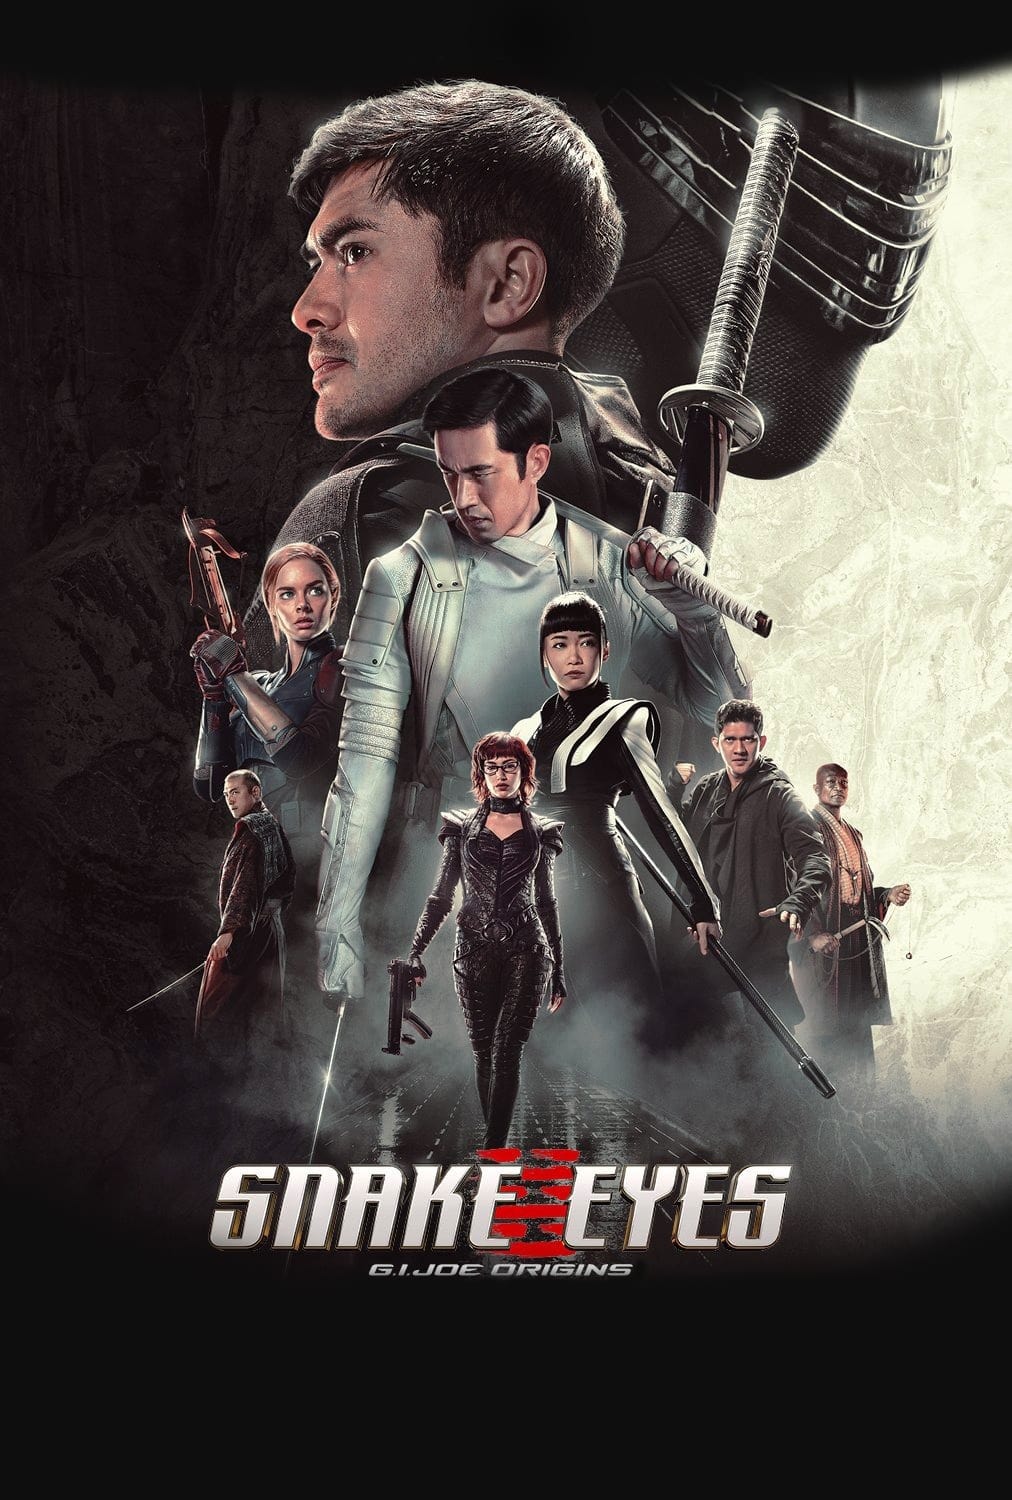 G.I. Joe: Змийски очи [Snake Eyes: G.I. Joe Origins] - 2021 Филми Онлайн BG  аудио 1080p